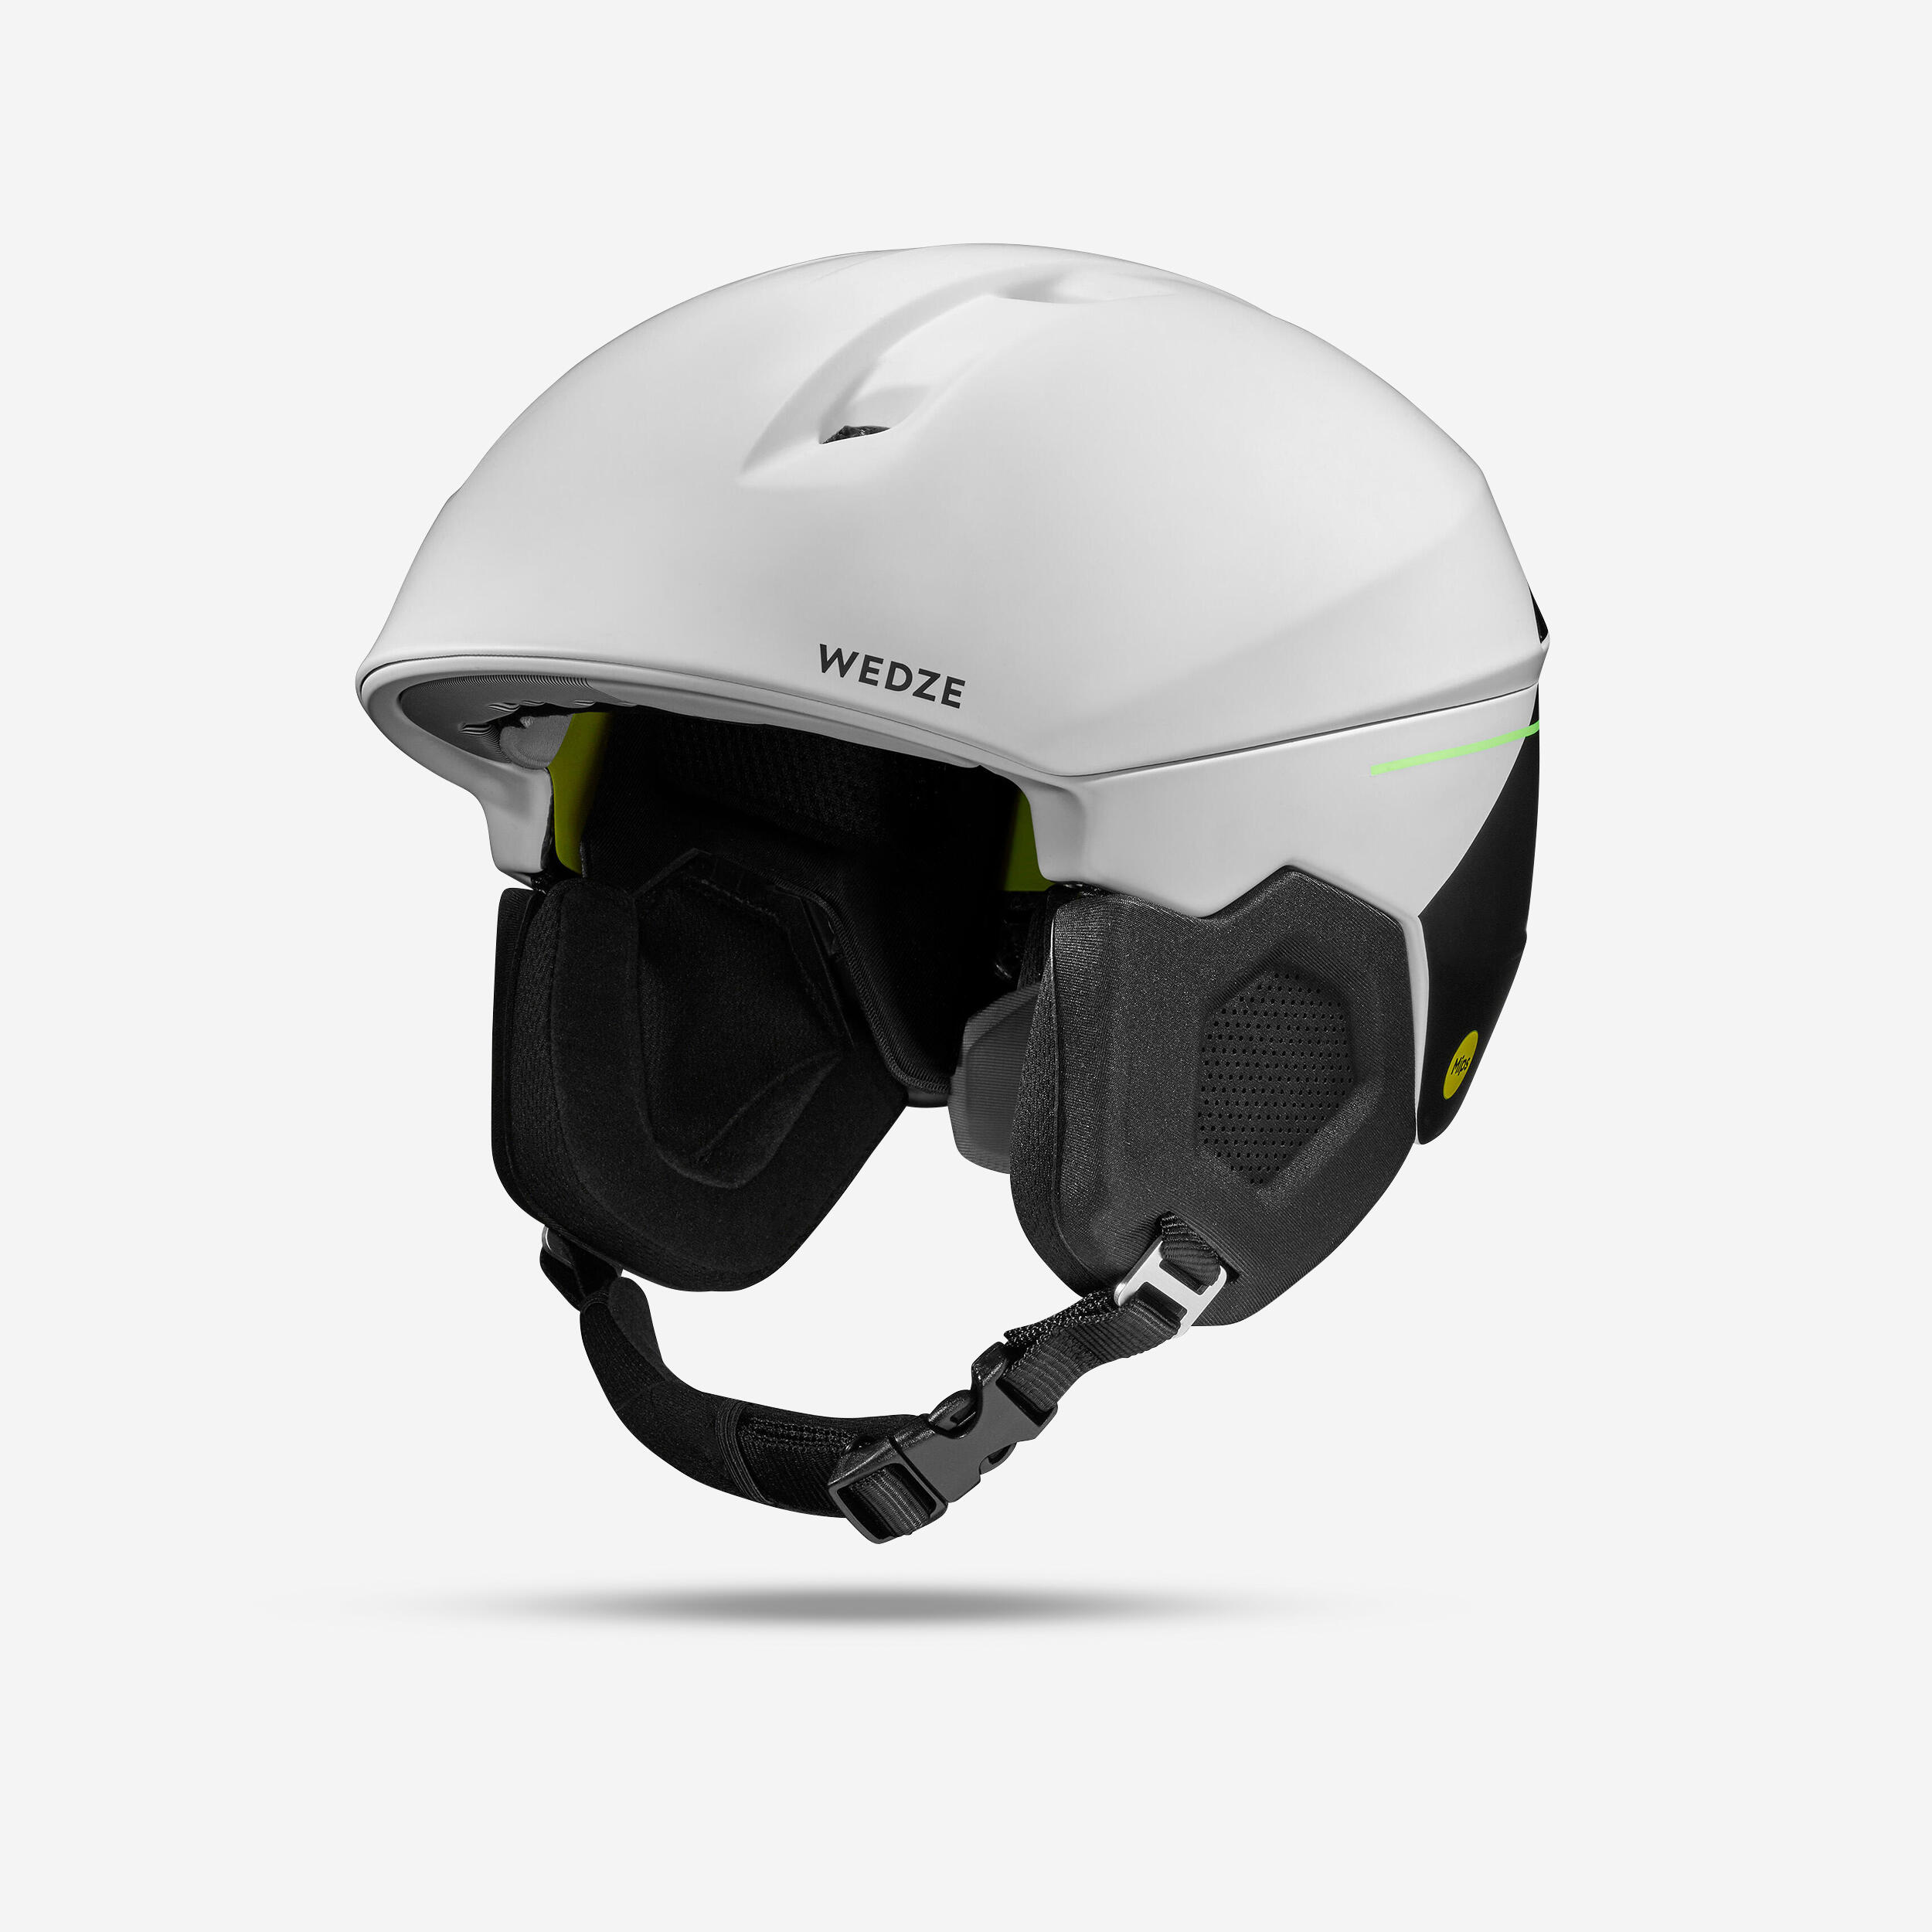 Adult ski helmet - PST 900 MIPS - white and black 1/12